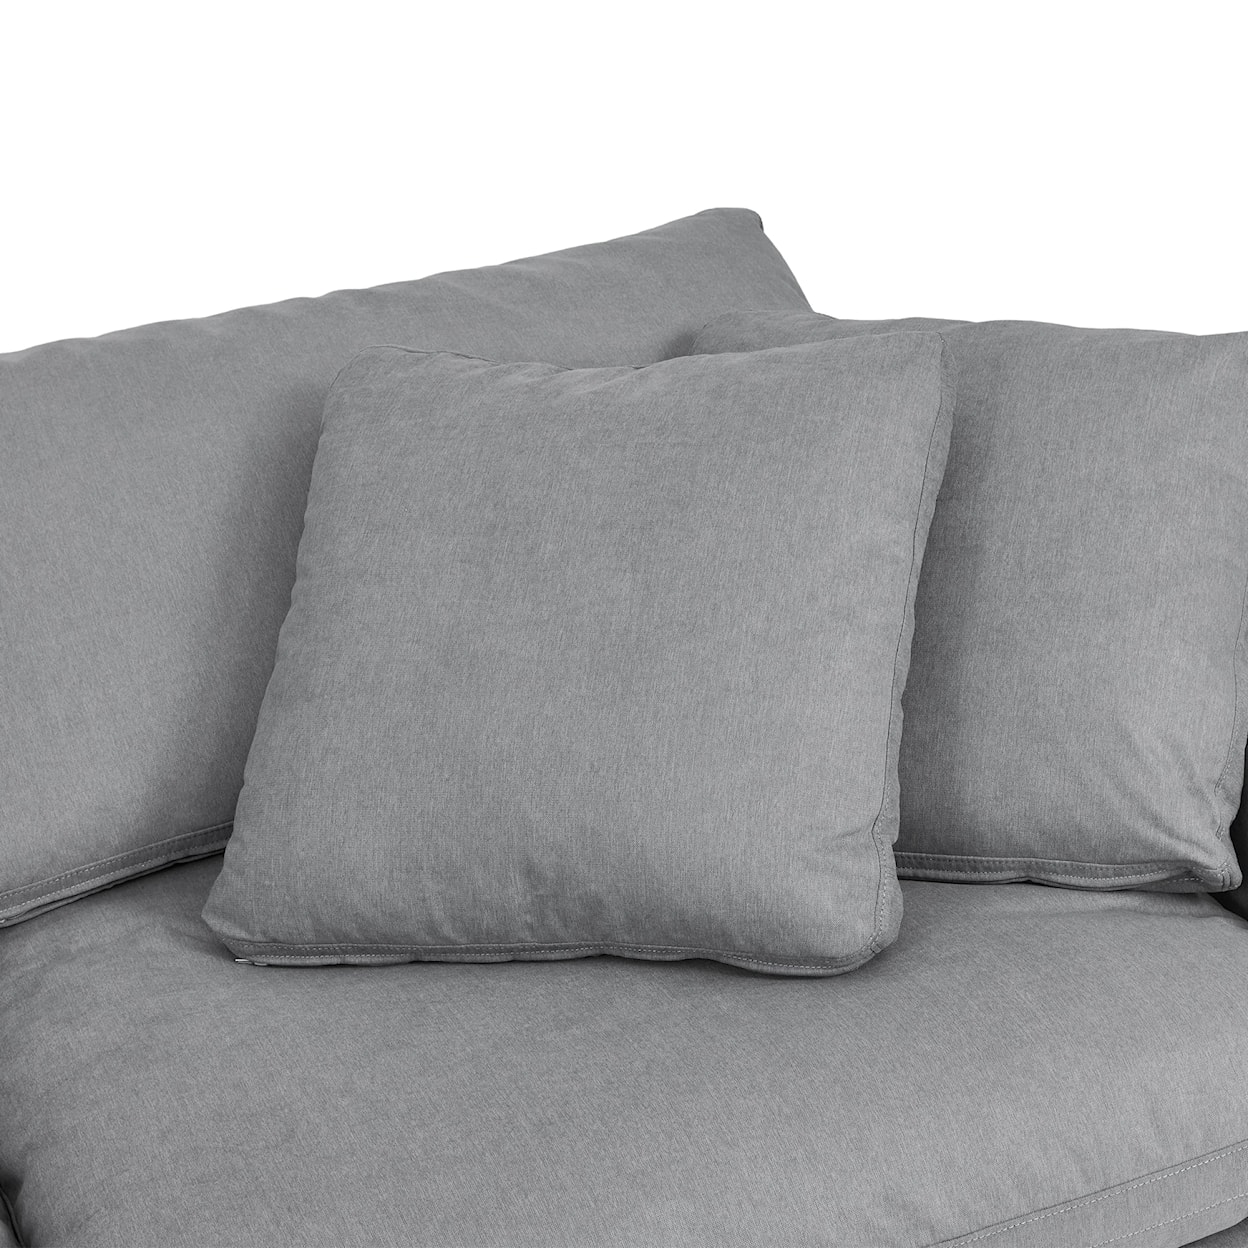 Armen Living Liberty Gray 2-Cushion Sofa